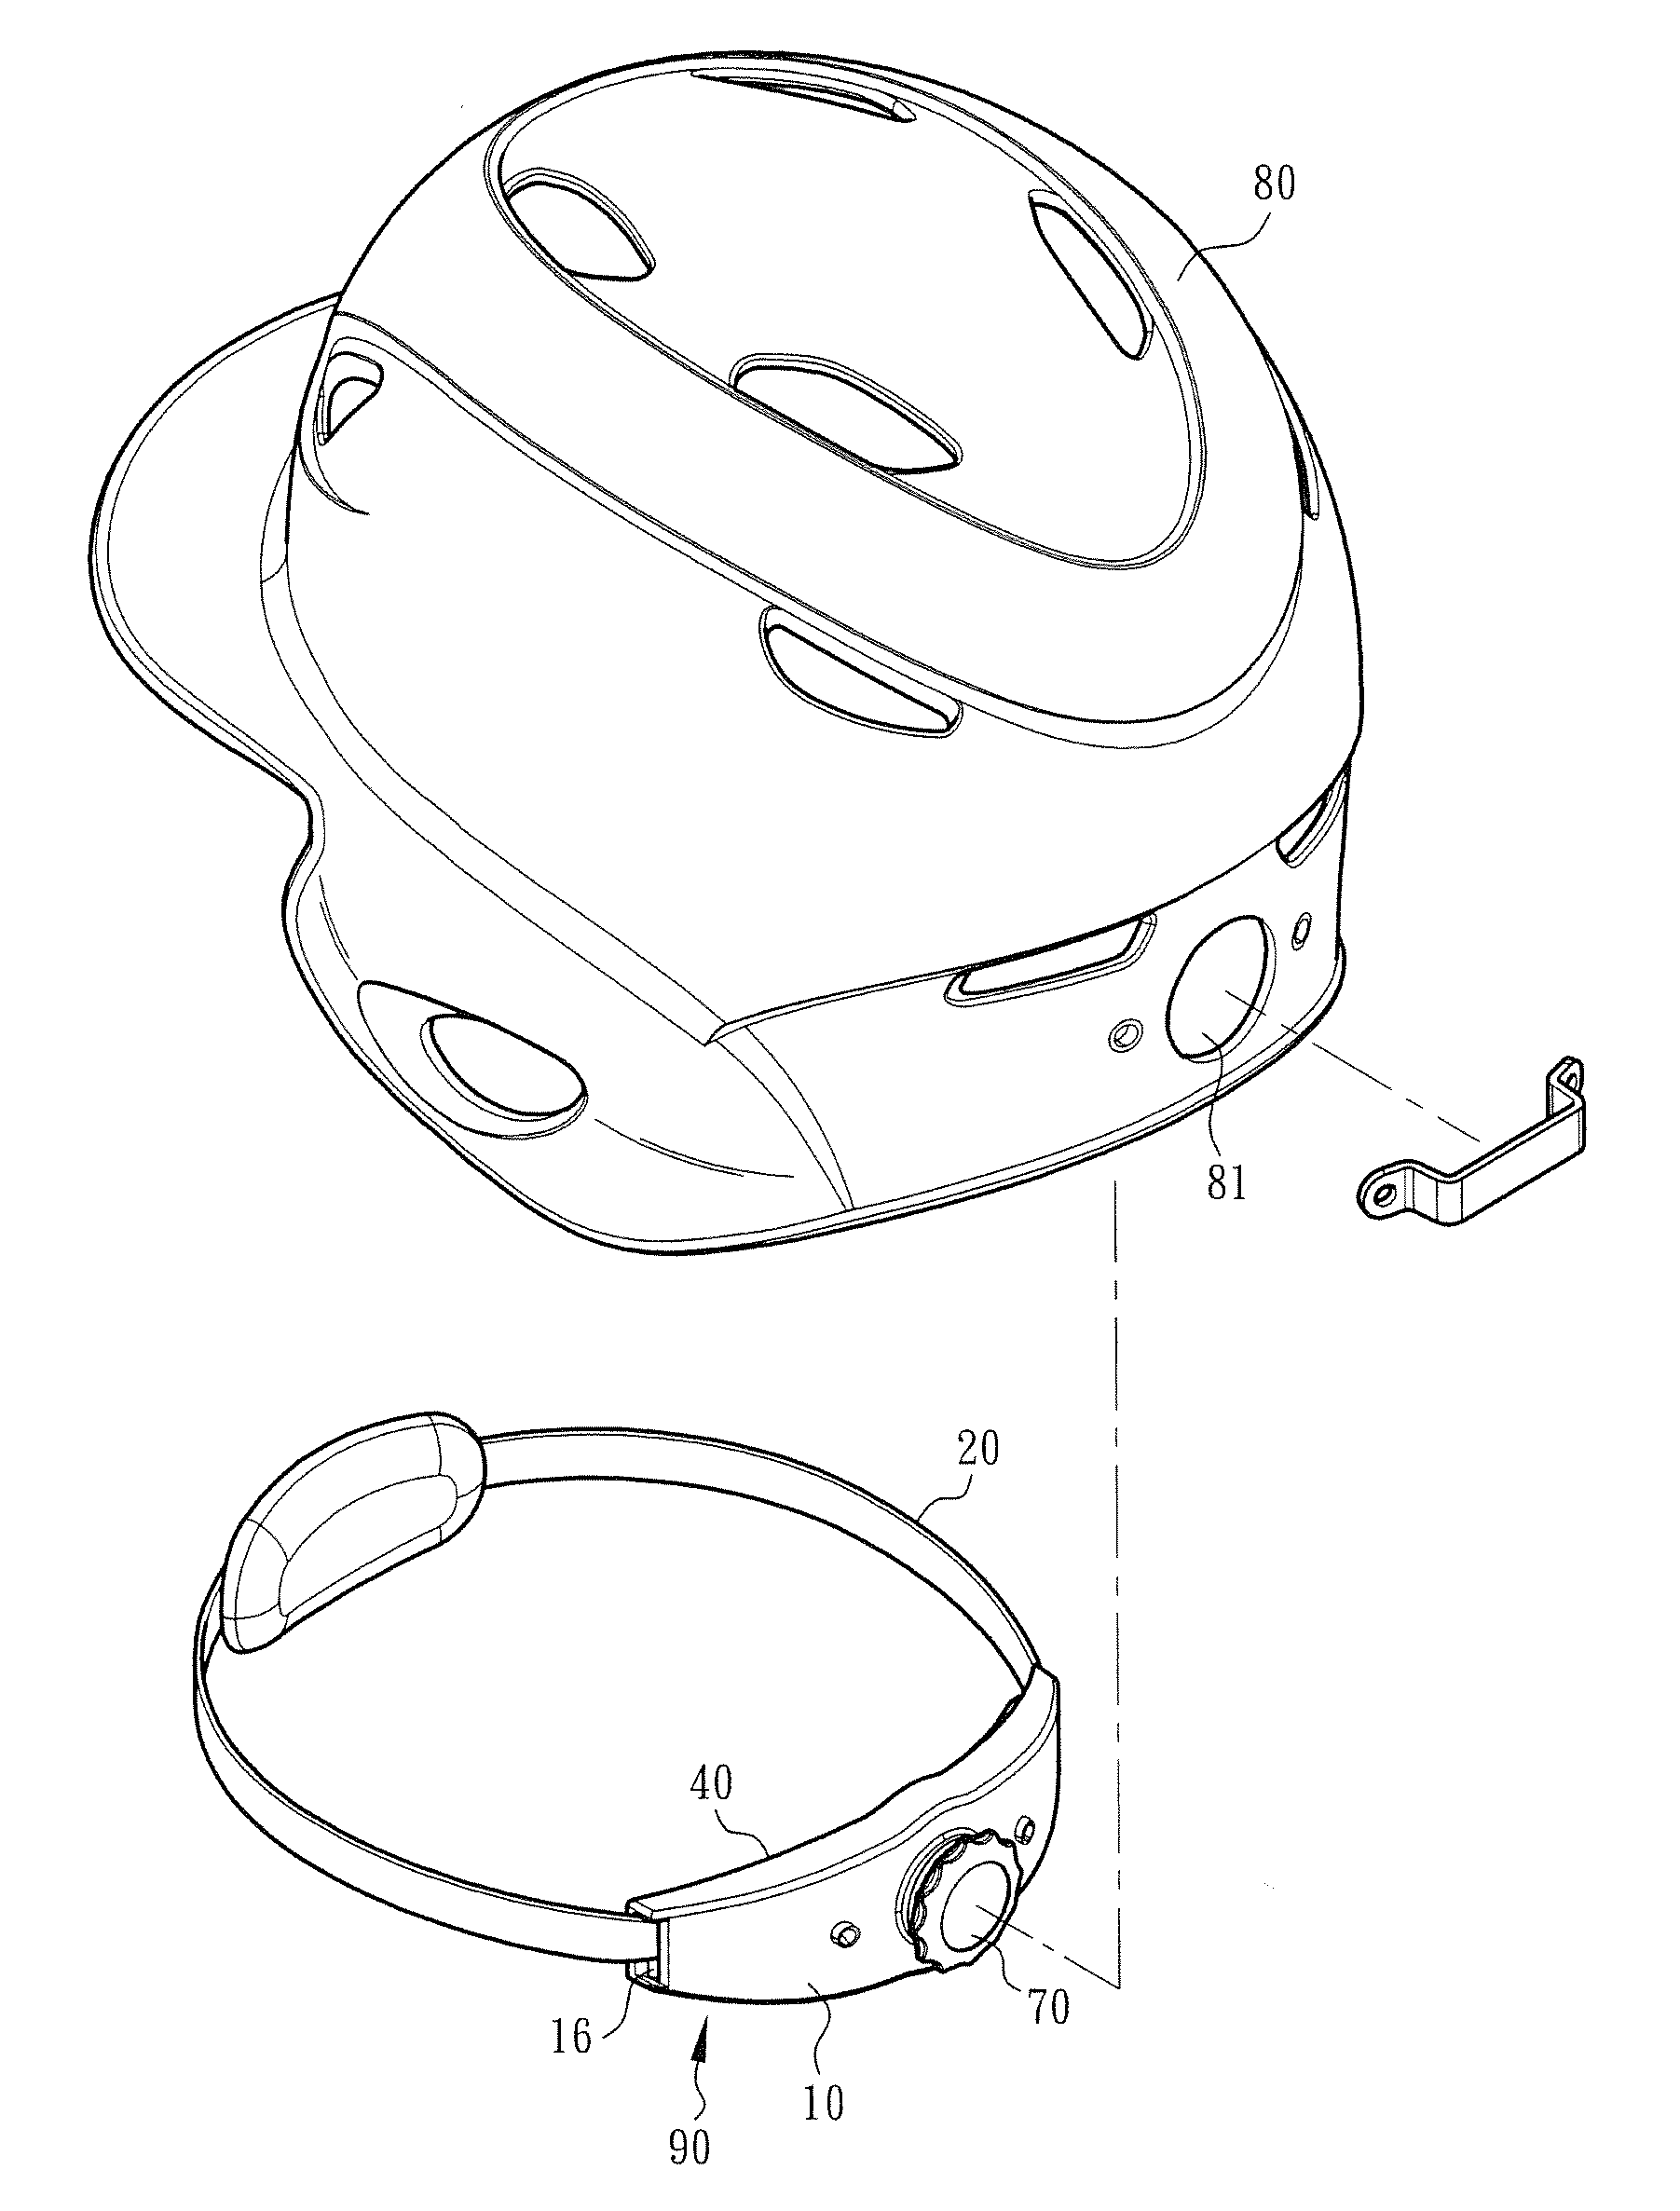 Head circumference adjustment device of a helmet